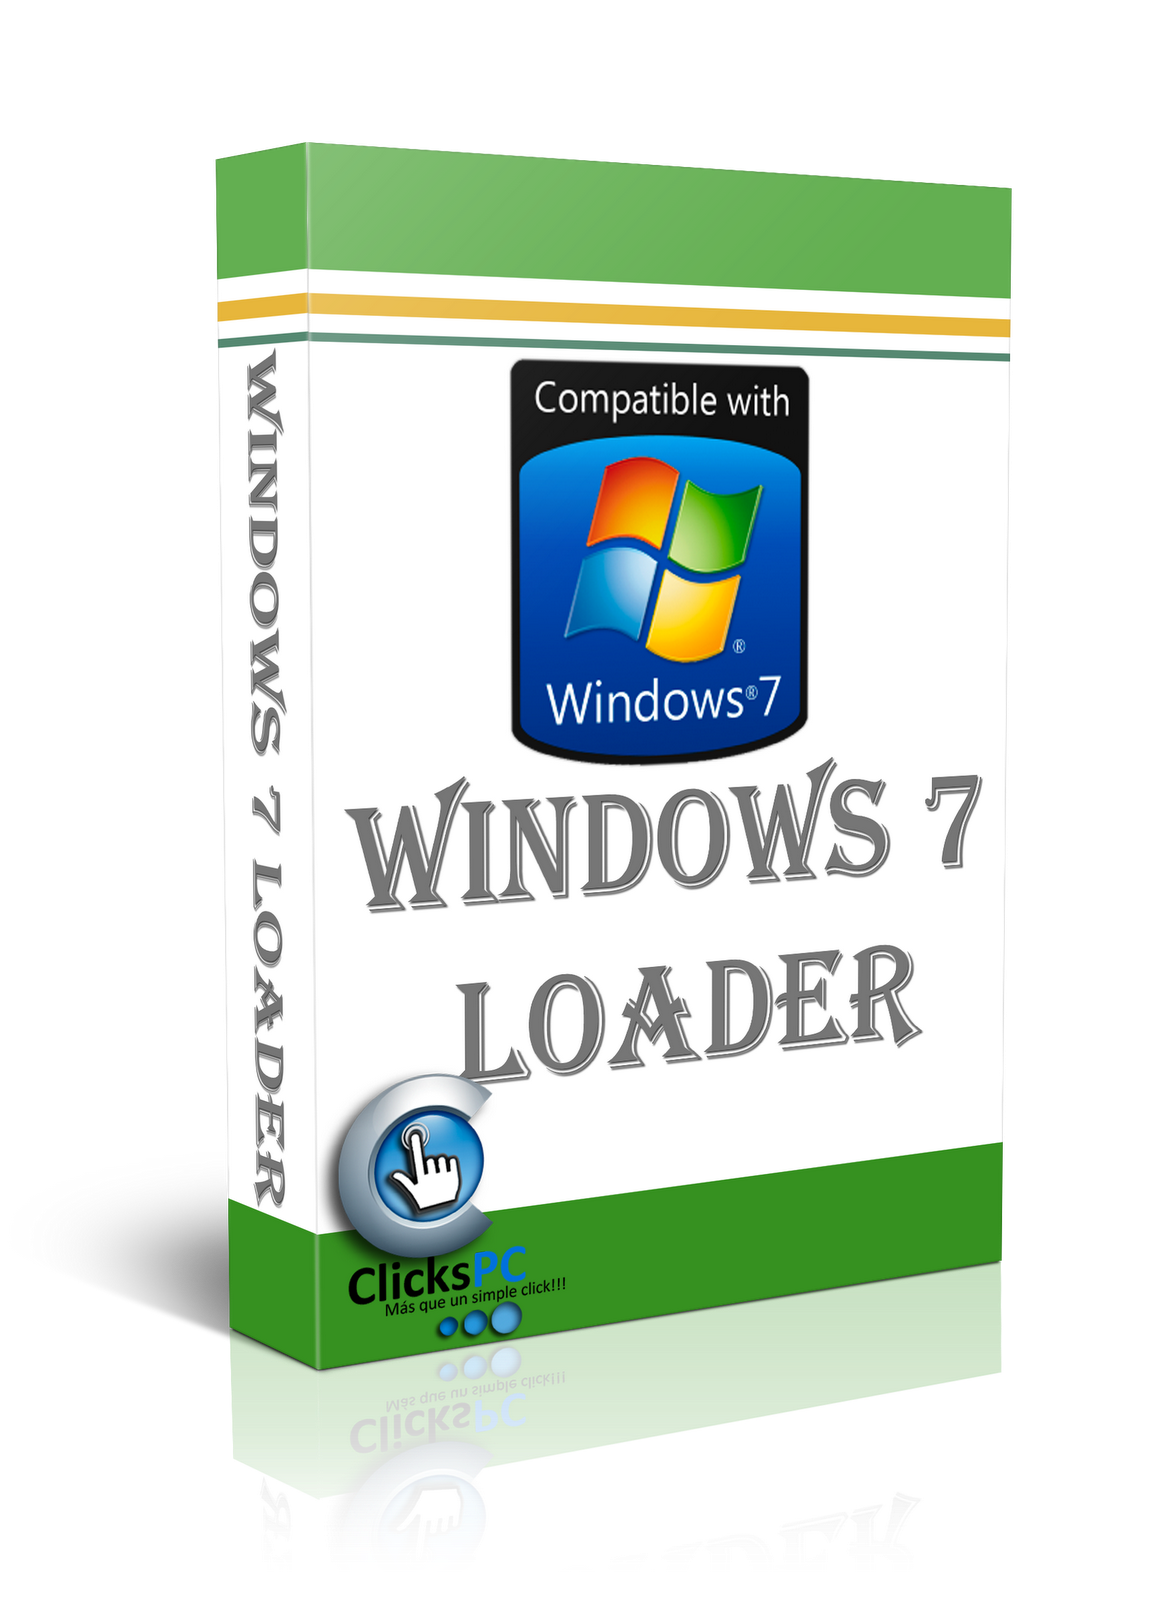 Windows loader 2.1 3 by daz